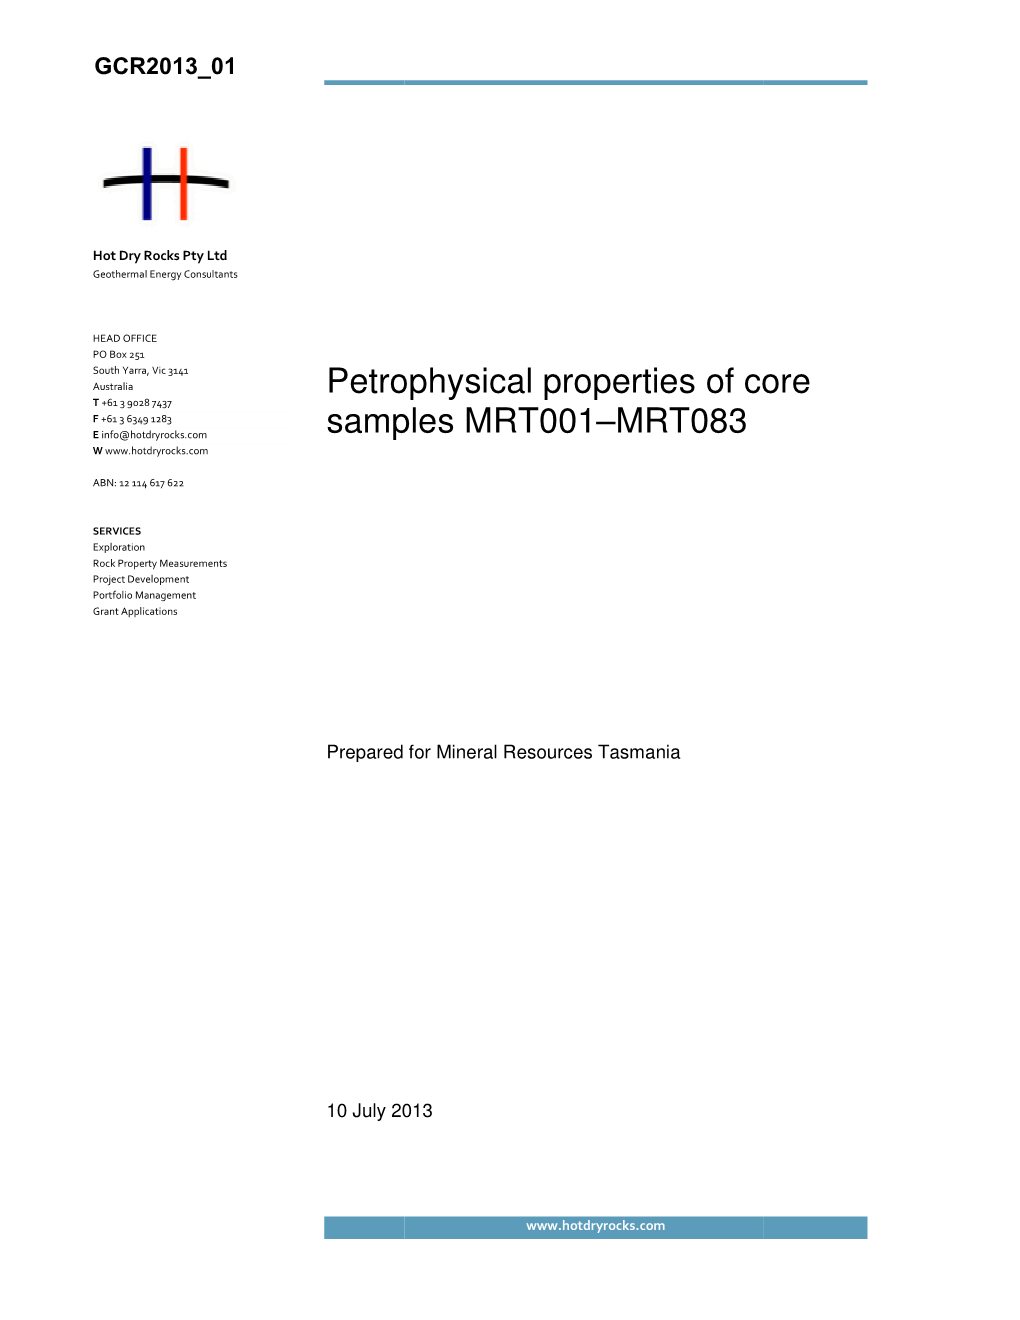 Petrophysical Samples Petrophysical Properties of Core Samples MRT001